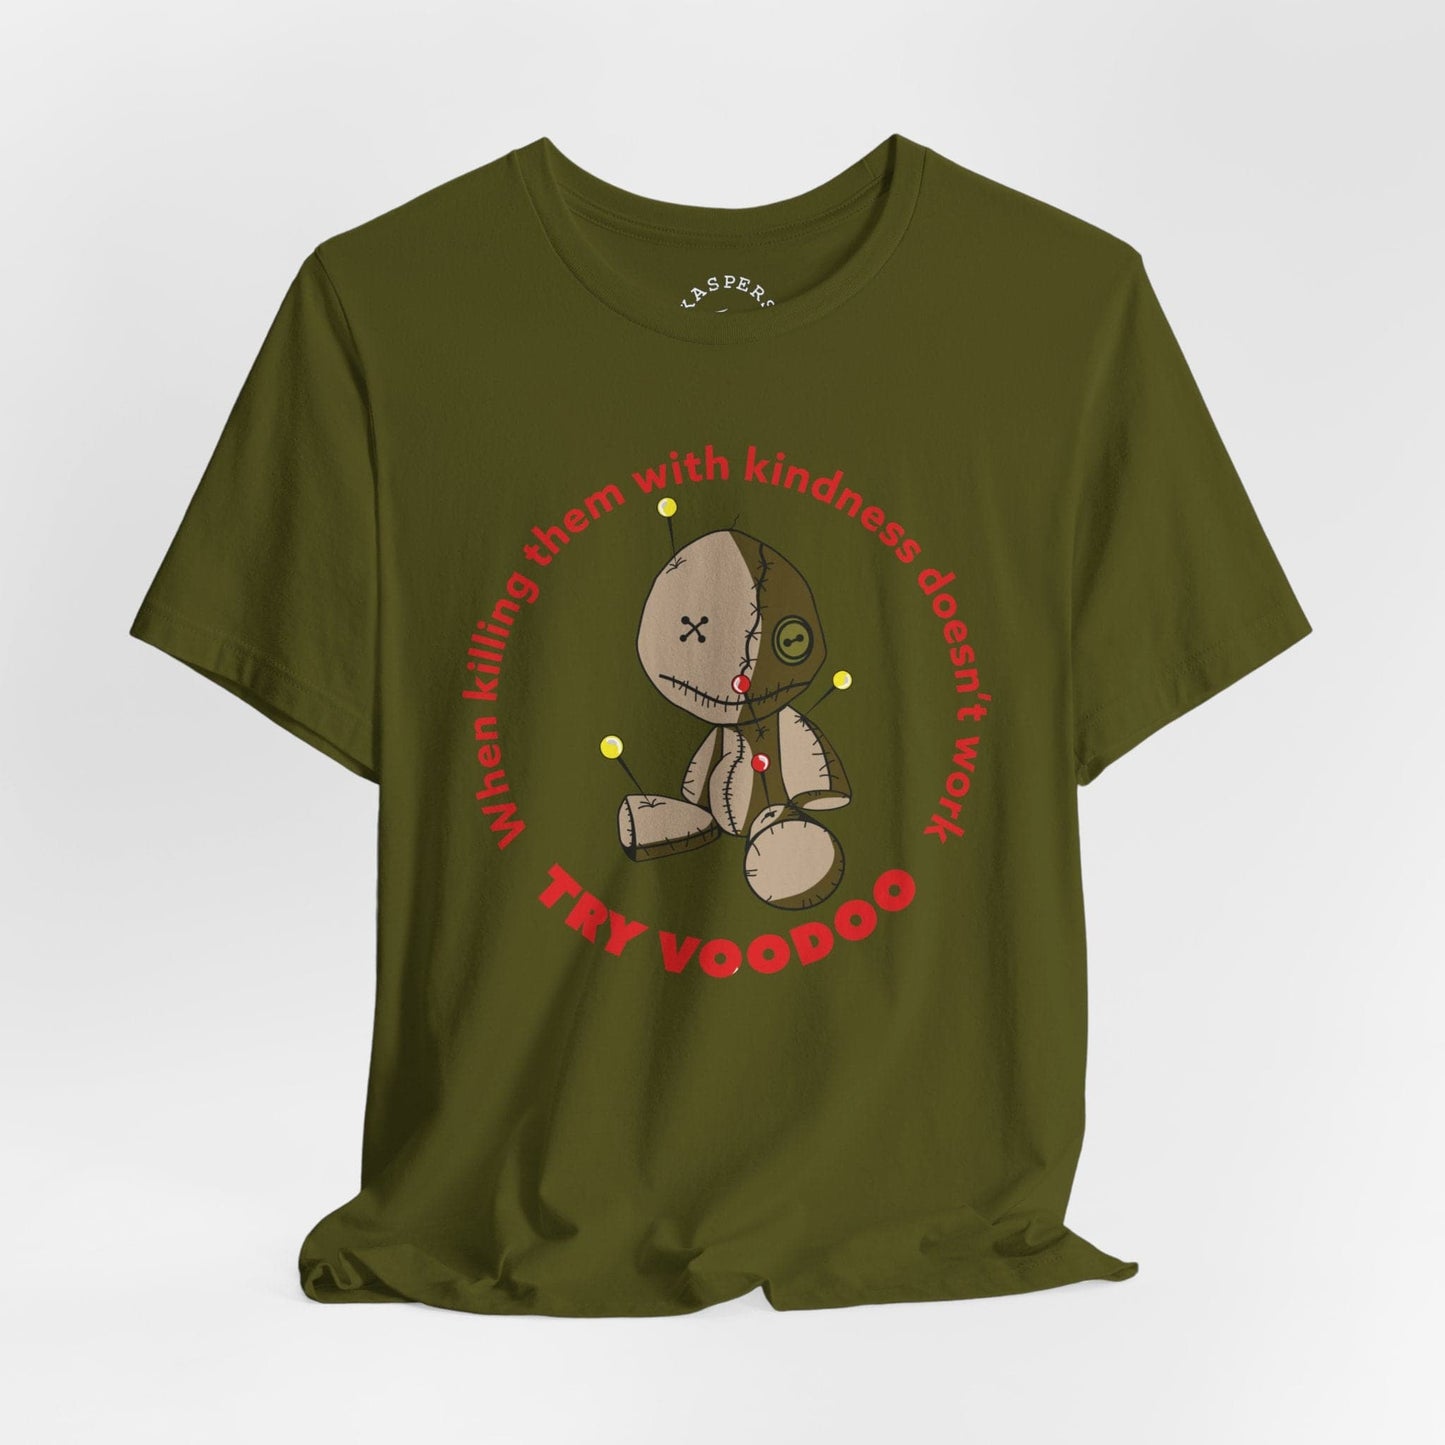 Try Voodoo T-Shirt